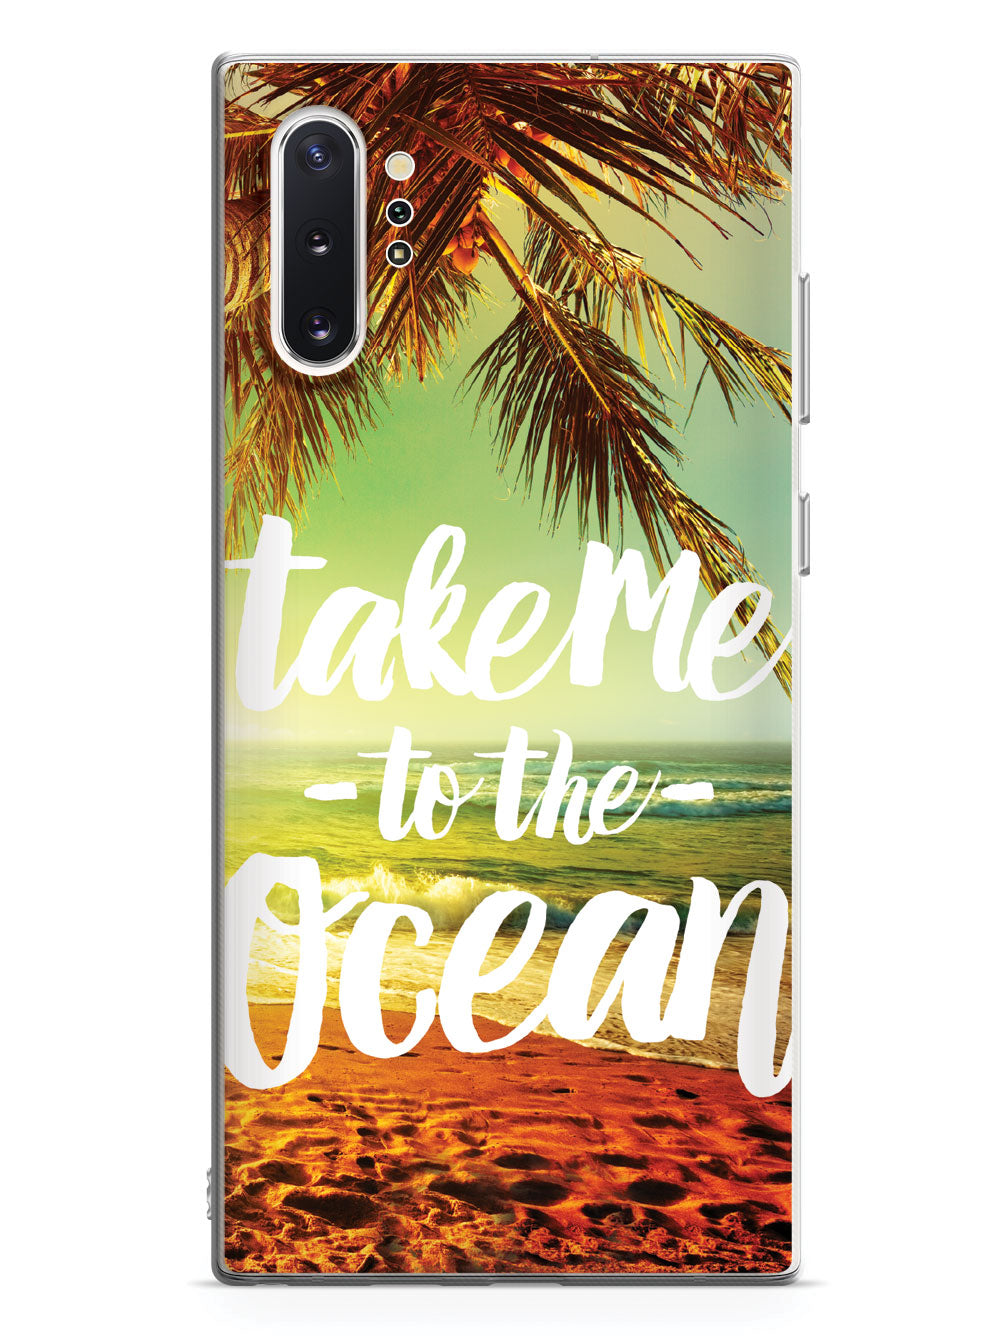 Take Me To The Ocean Case